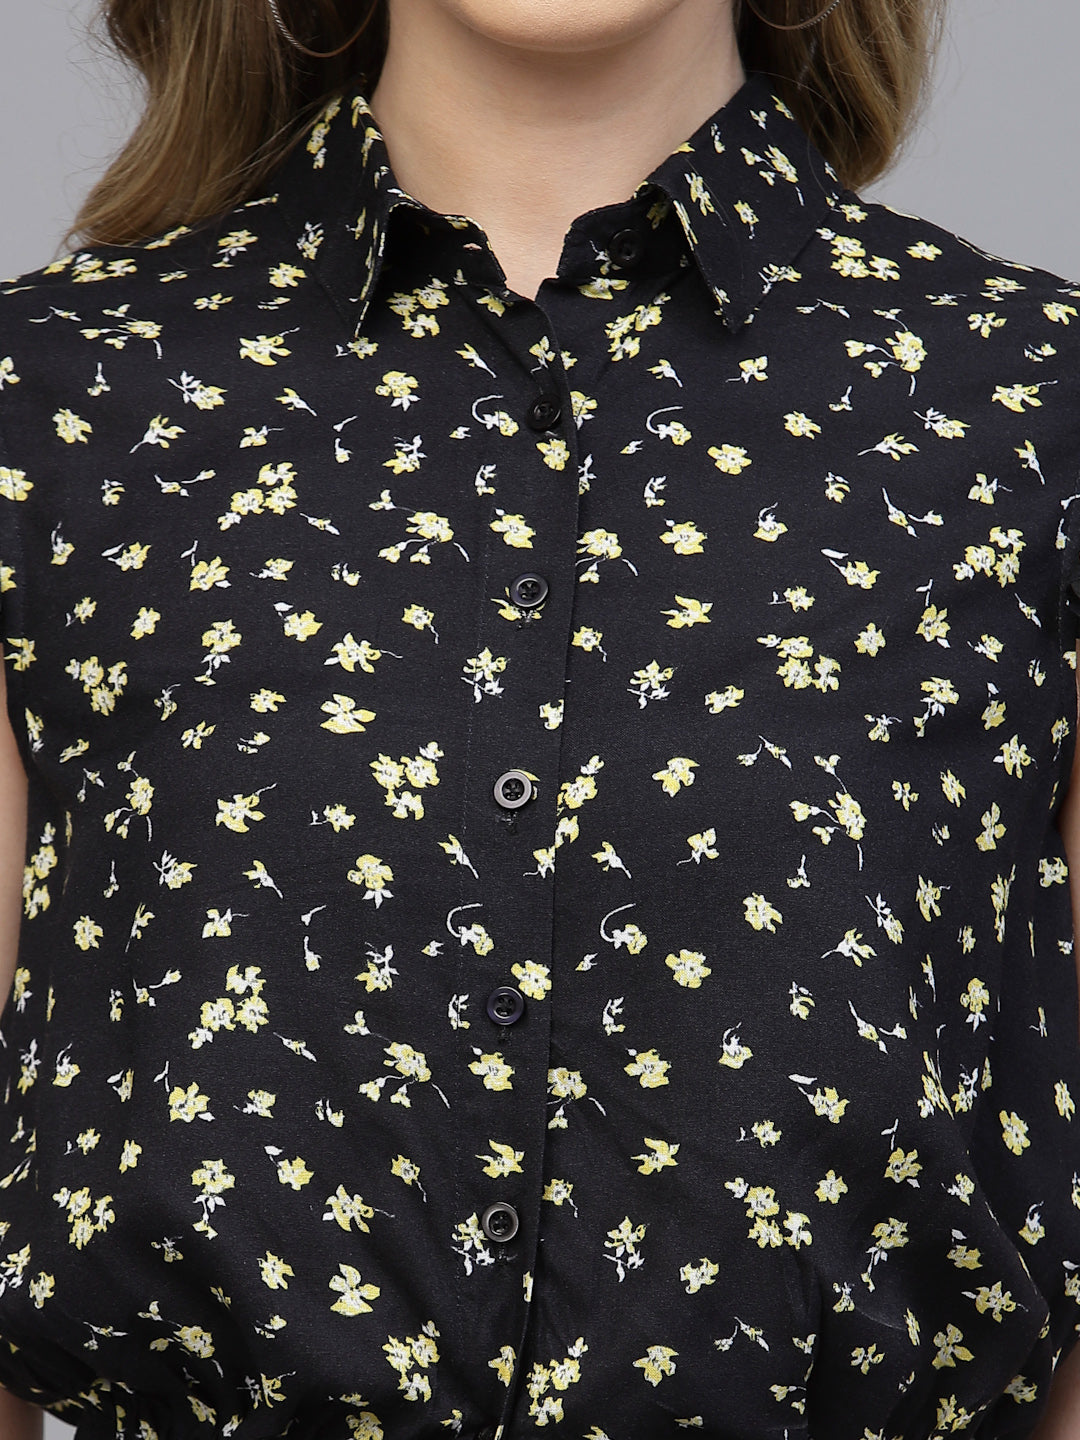 Valbone Women's Black Rayon Floral Printed Tie Top Short Sleeves with Collar